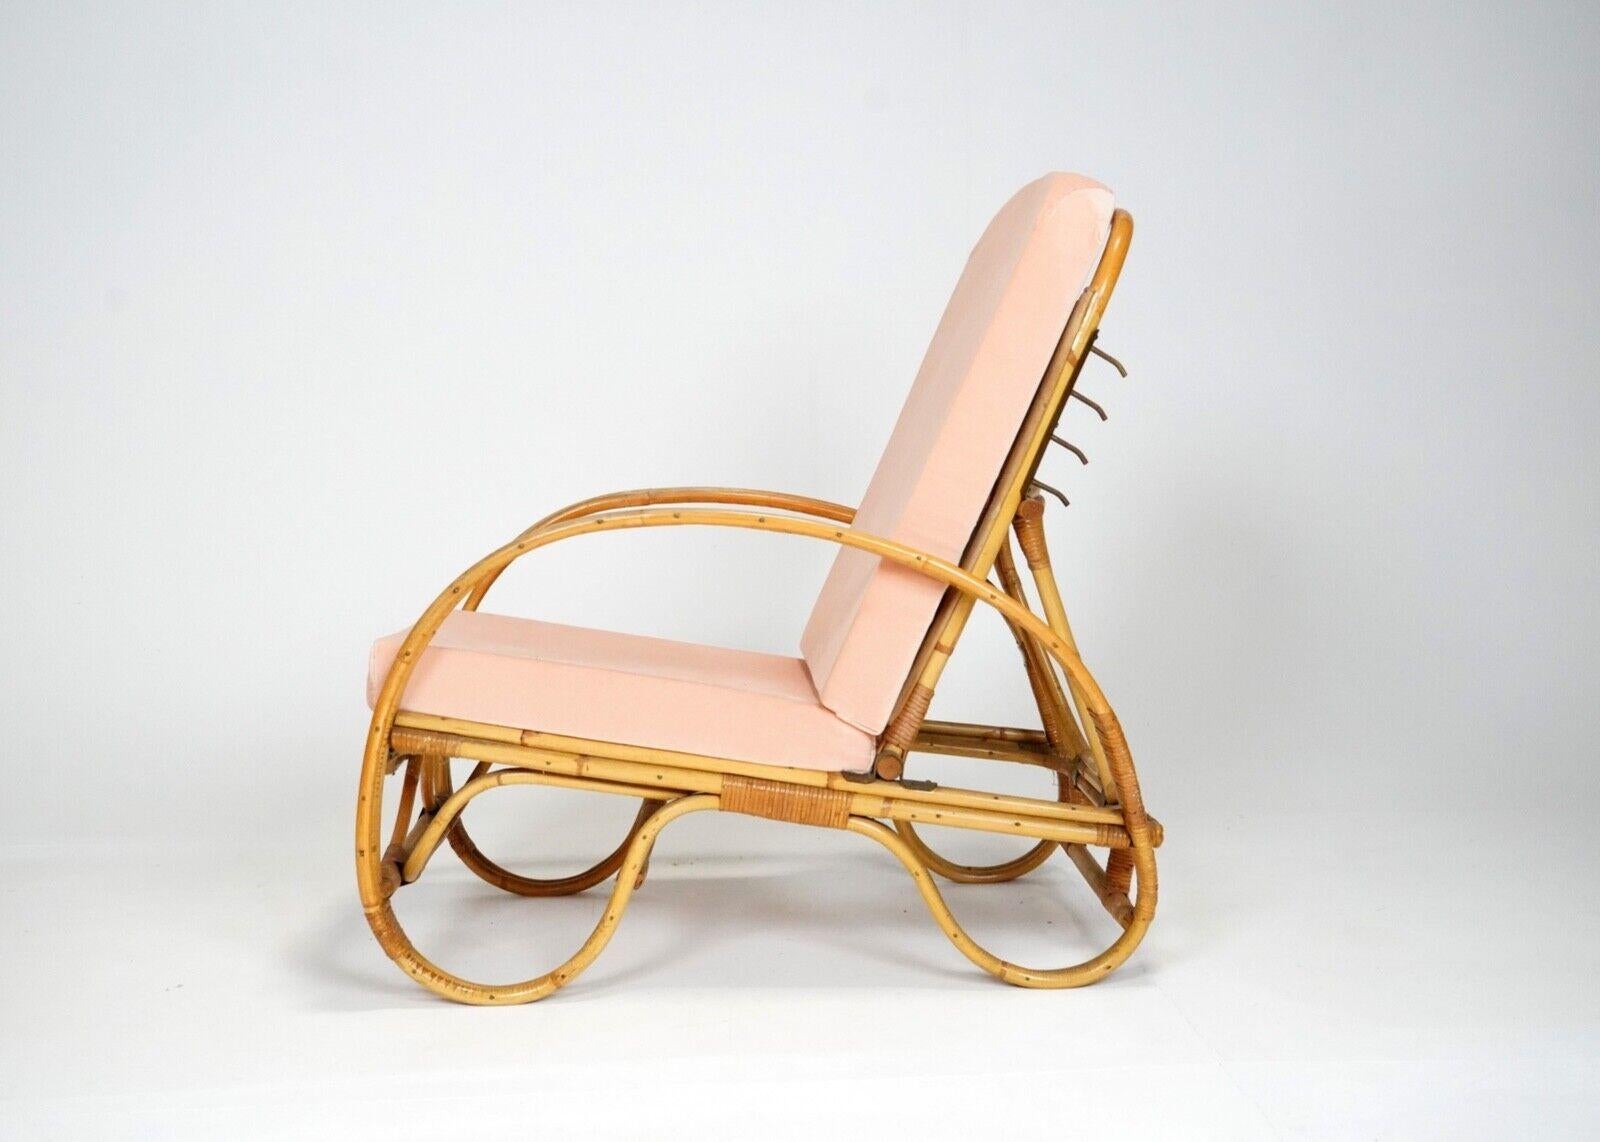 Velvet Wicker Sun Lounge Chair by Angraves - Cane Rattan Armchair